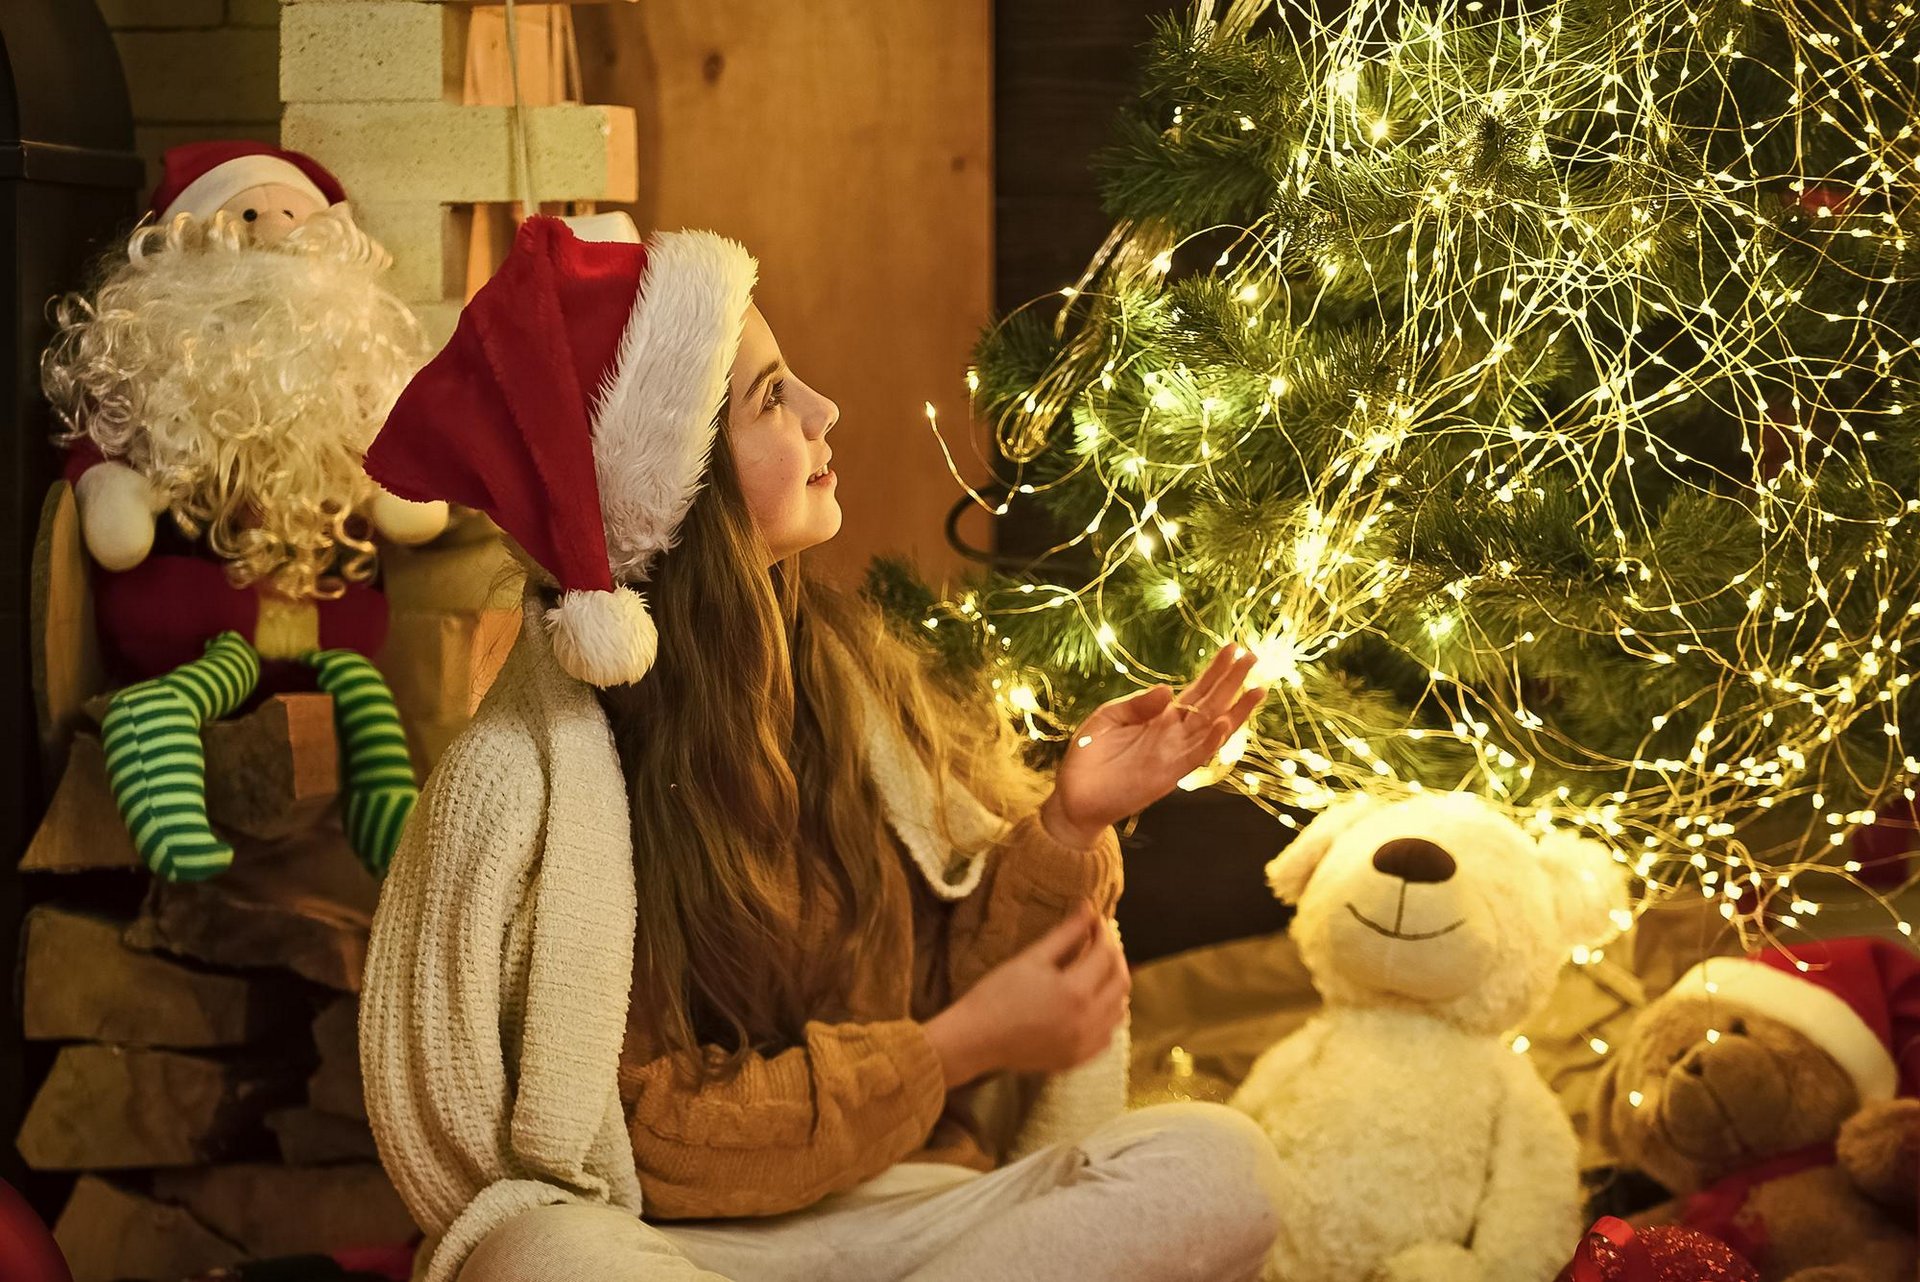 santa little girl christmas tree with lights  